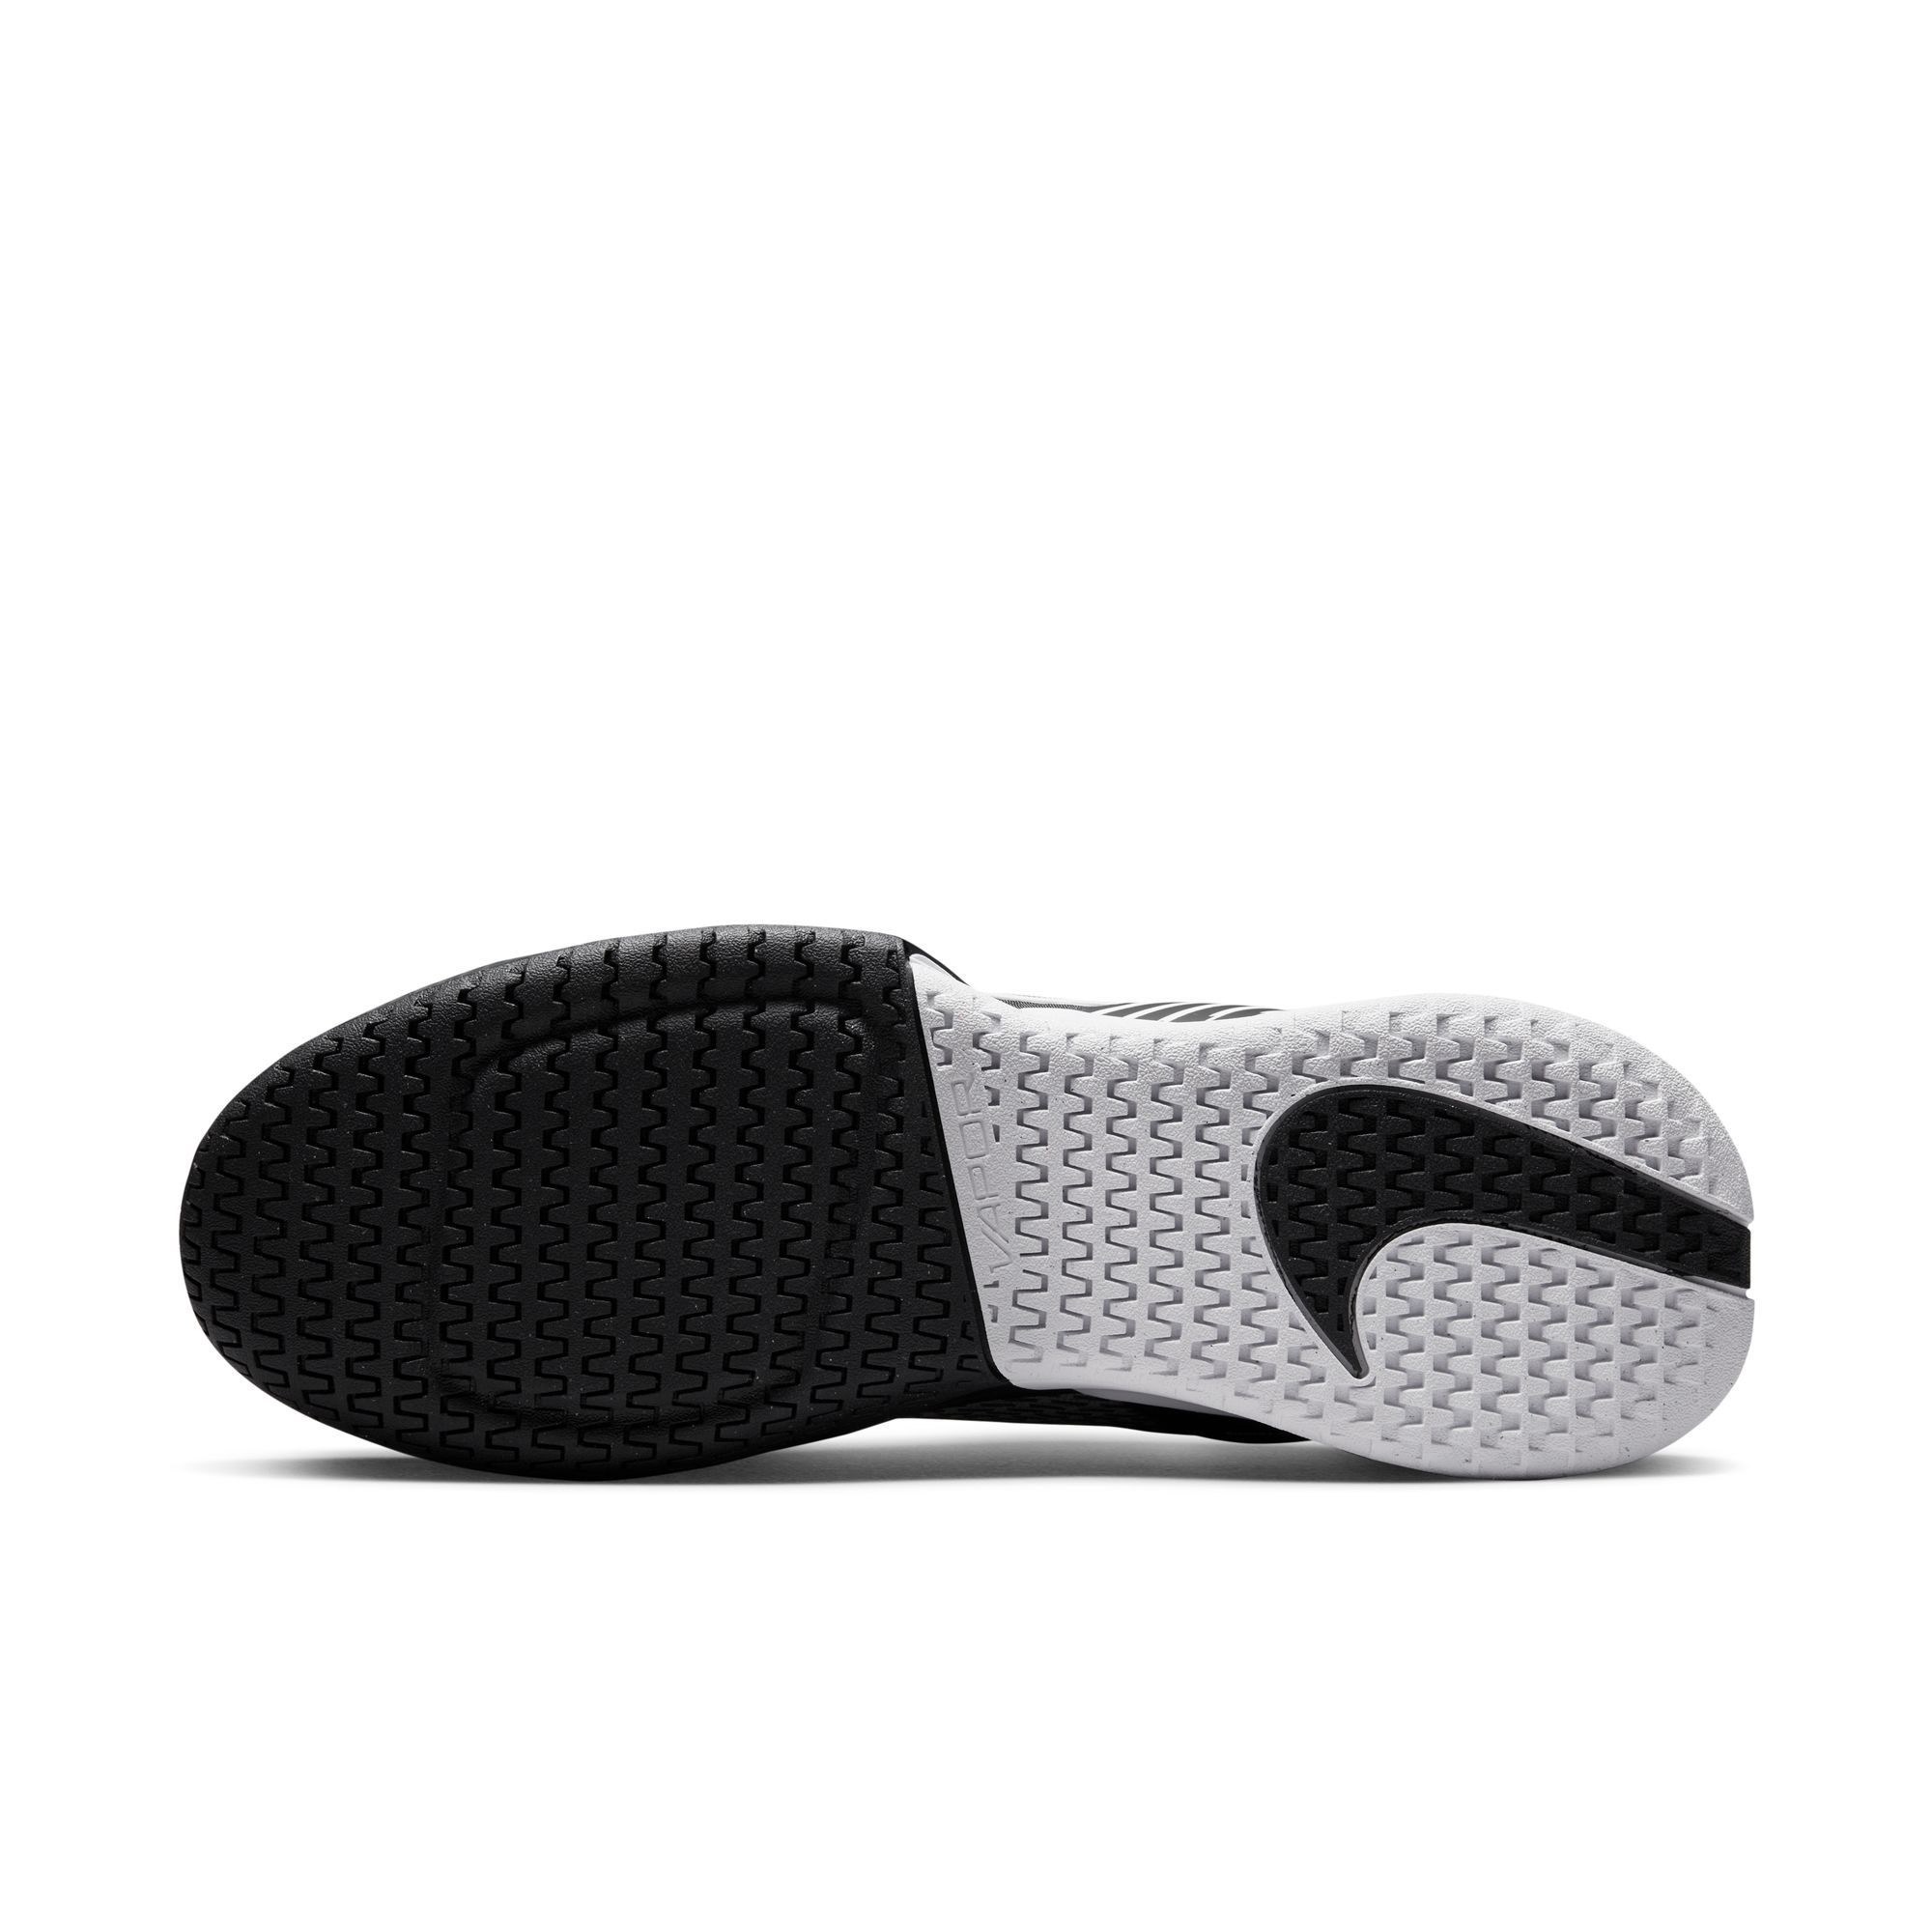 Nike Men's Zoom Hyperace 2 Indoor Court Volleyball Shoes, Low Top